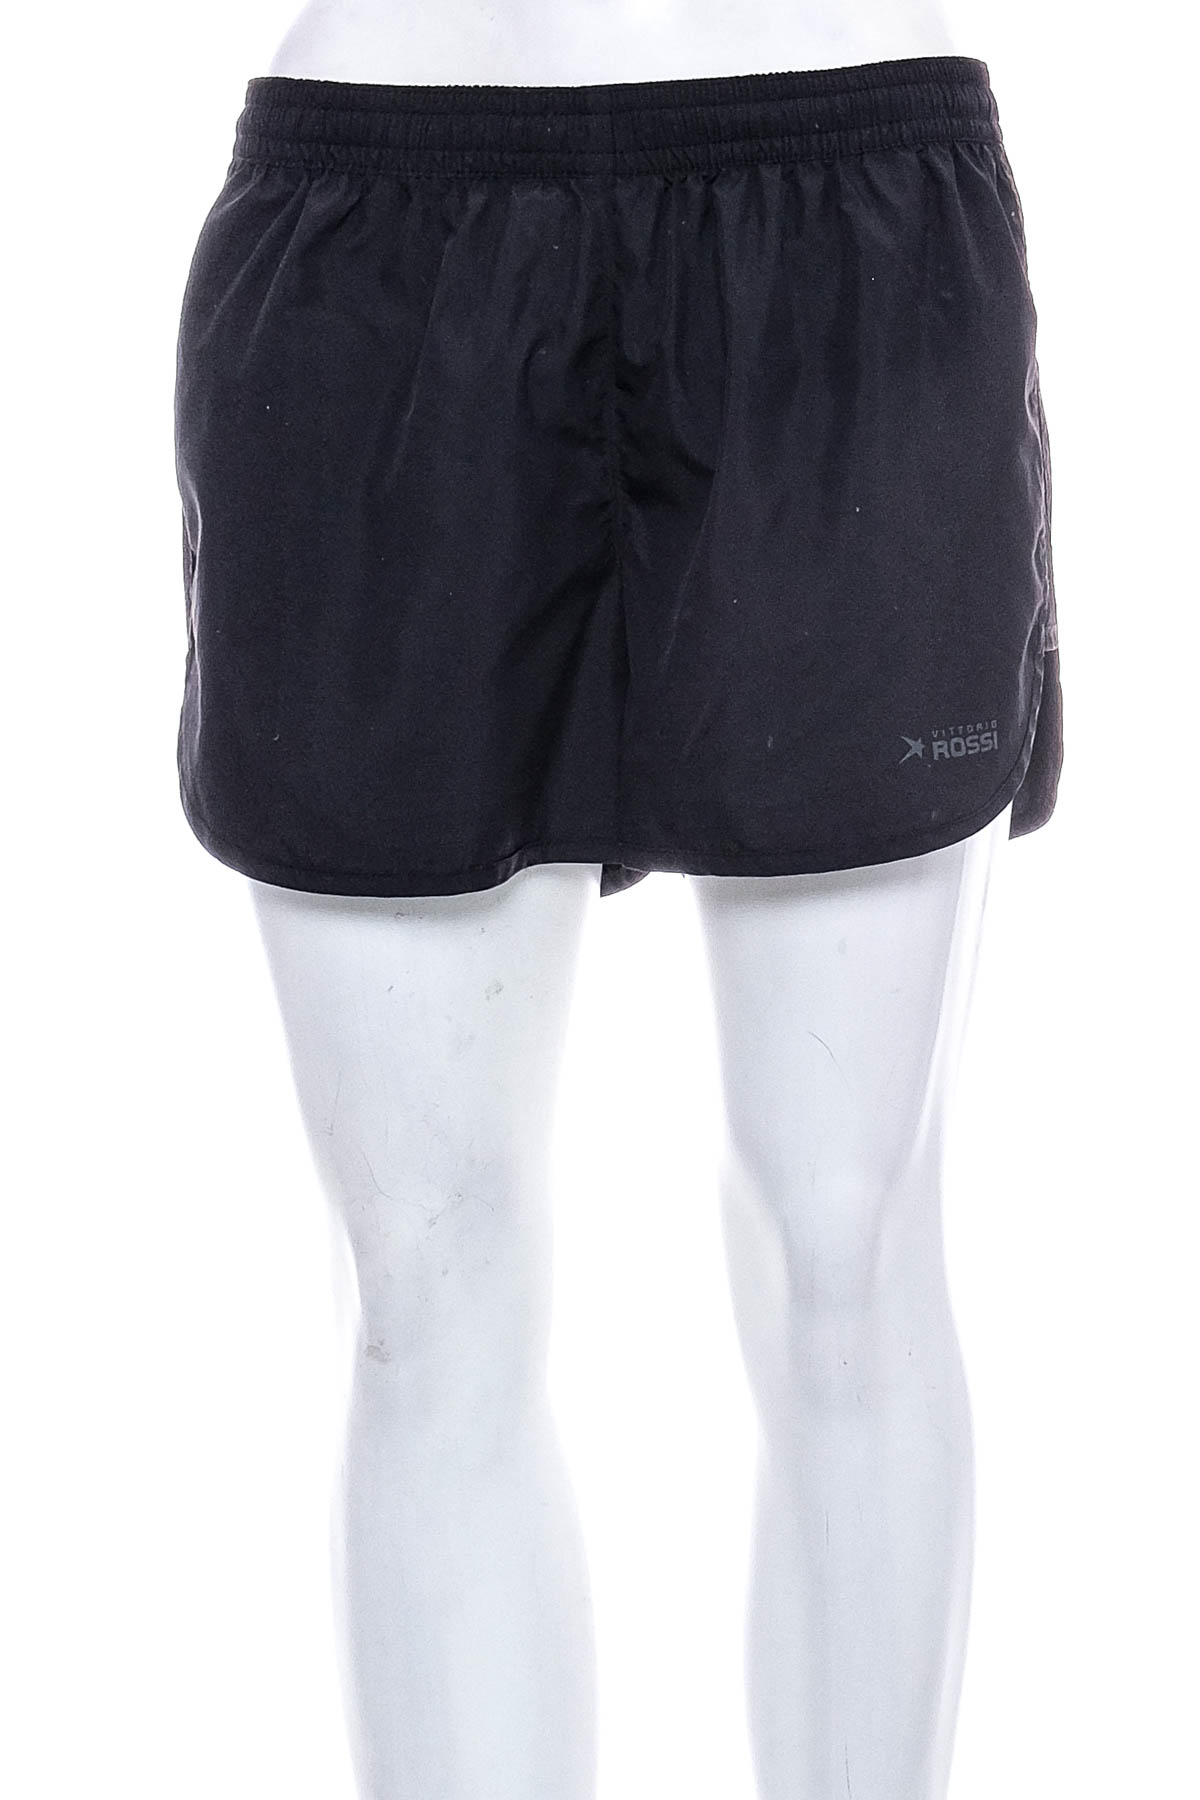 Women's shorts - Vittorio Rossi - 0